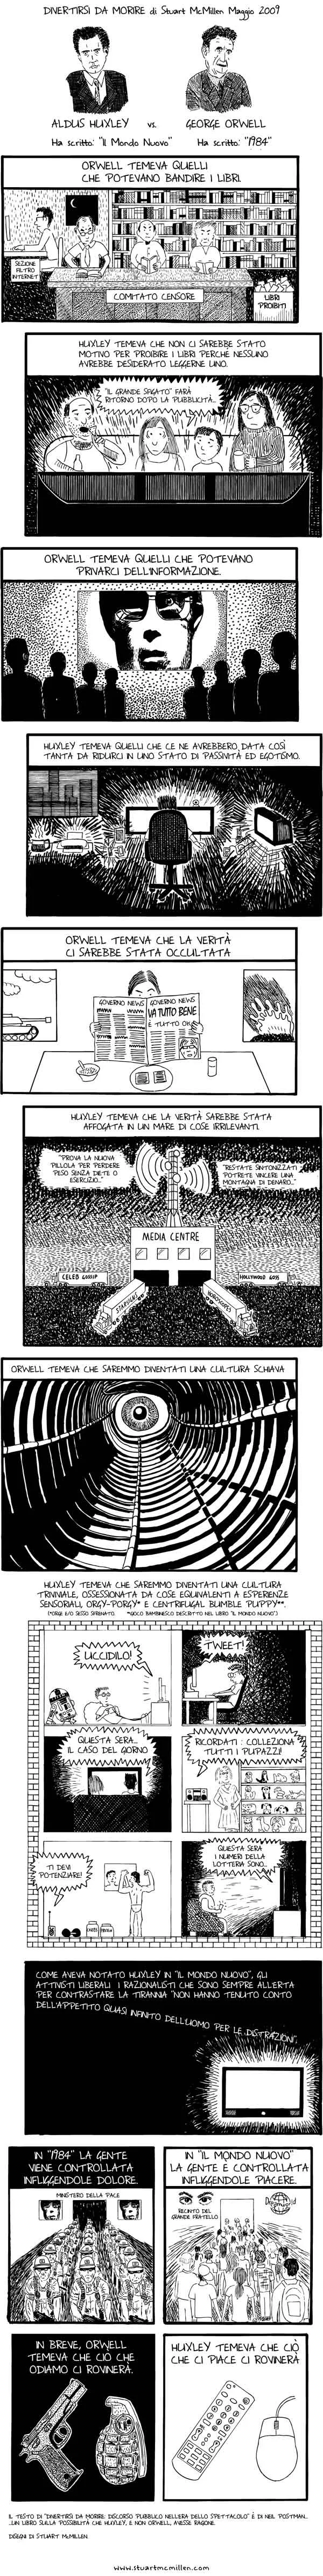 Vignette Orwell vs Huxley